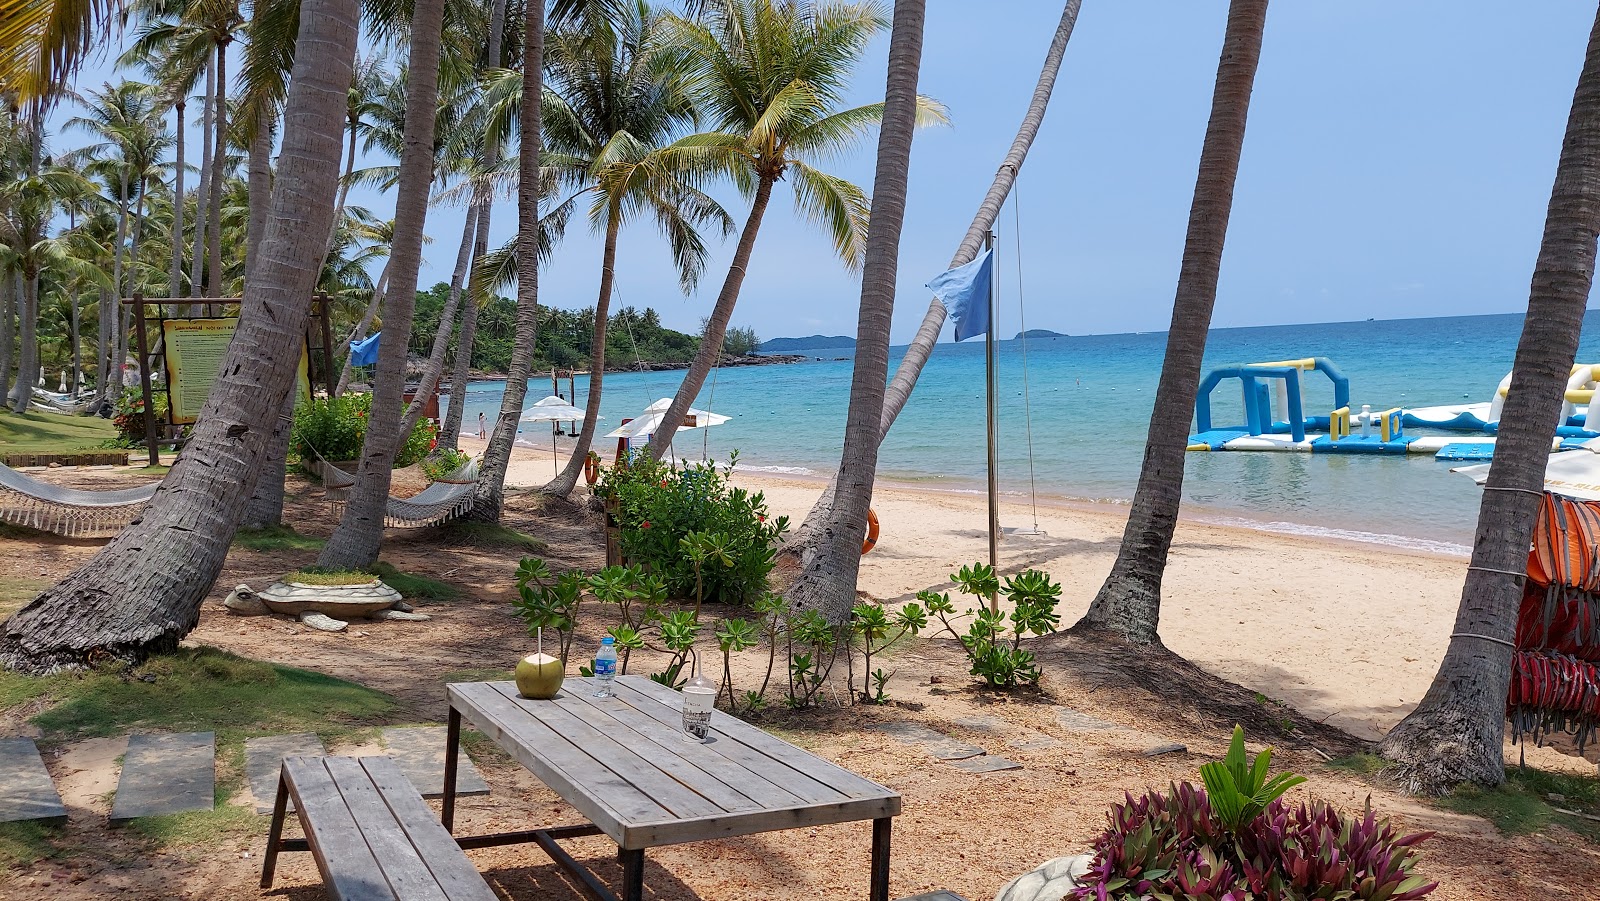 Photo of Sunworld Beach - popular place among relax connoisseurs